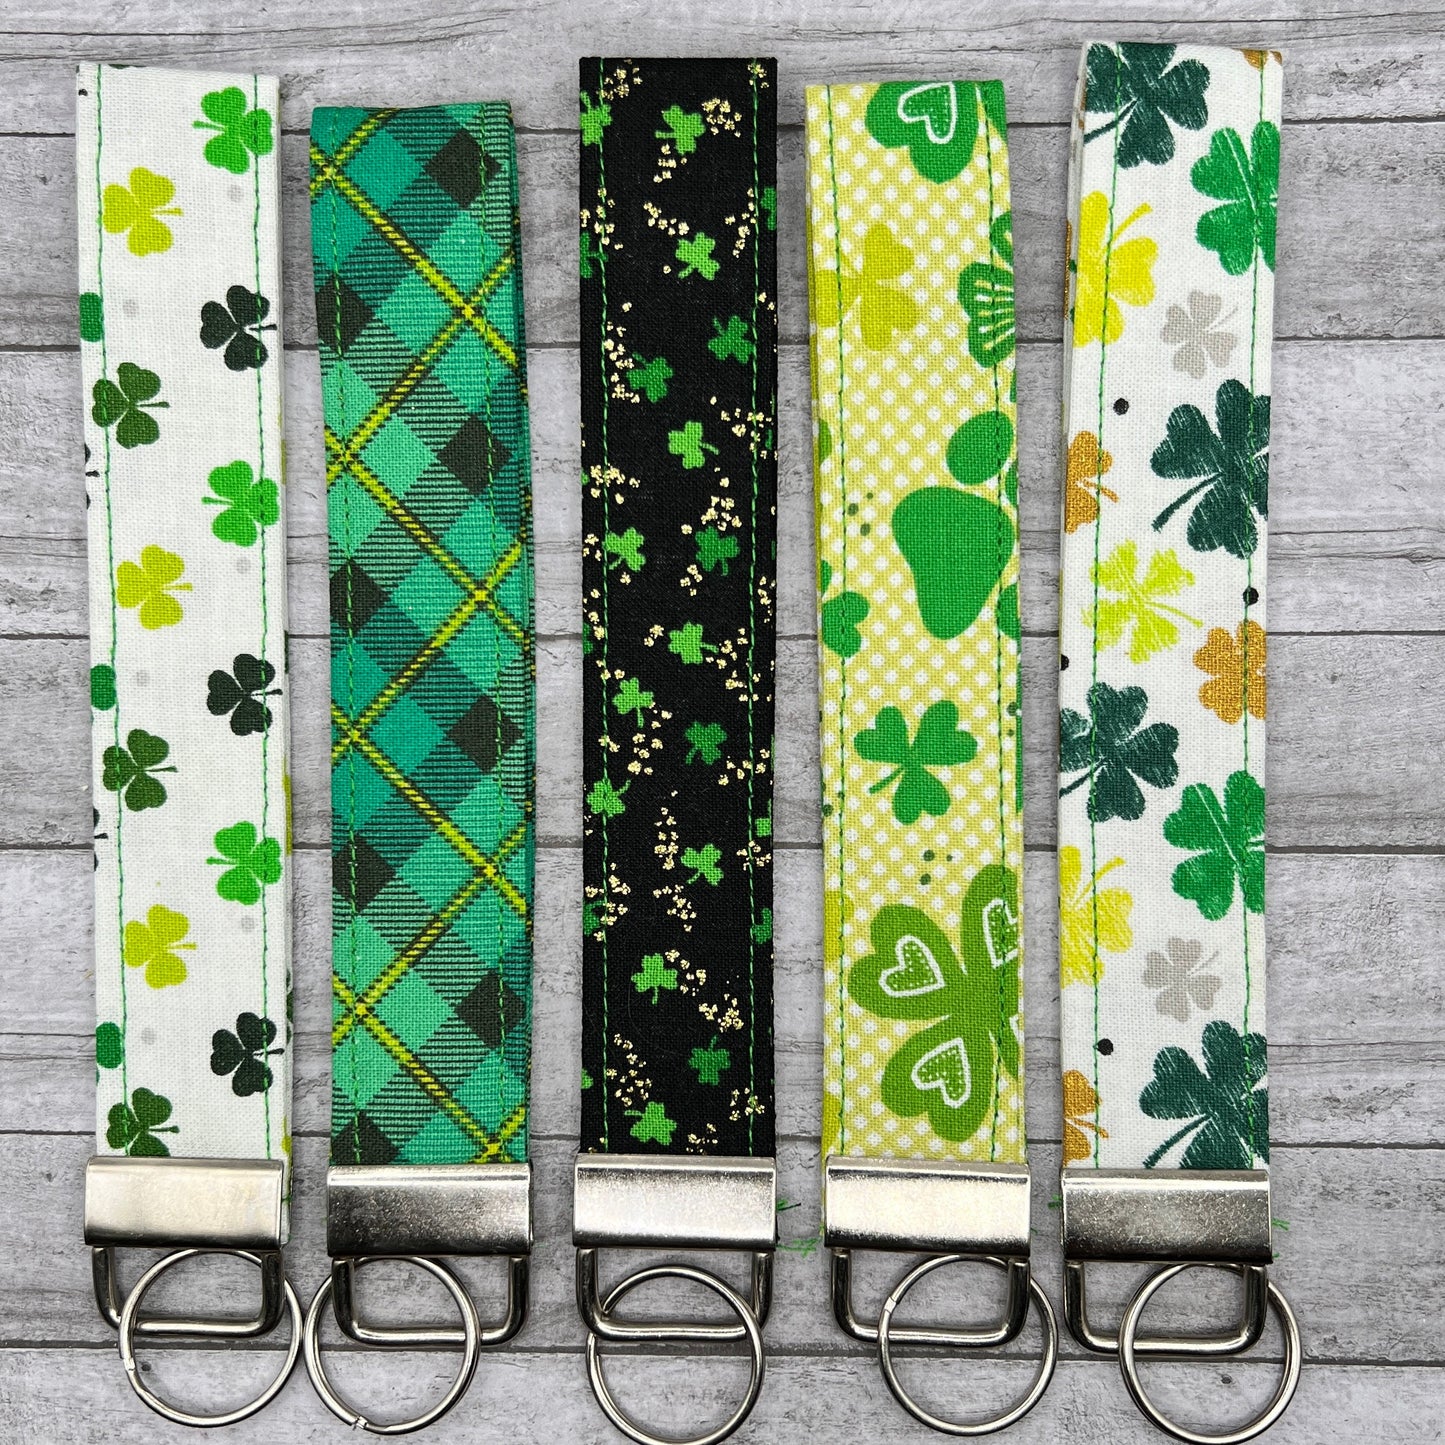 Handmade 6” St Patrick’s Day Shamrock Green Wristlet Key Fob